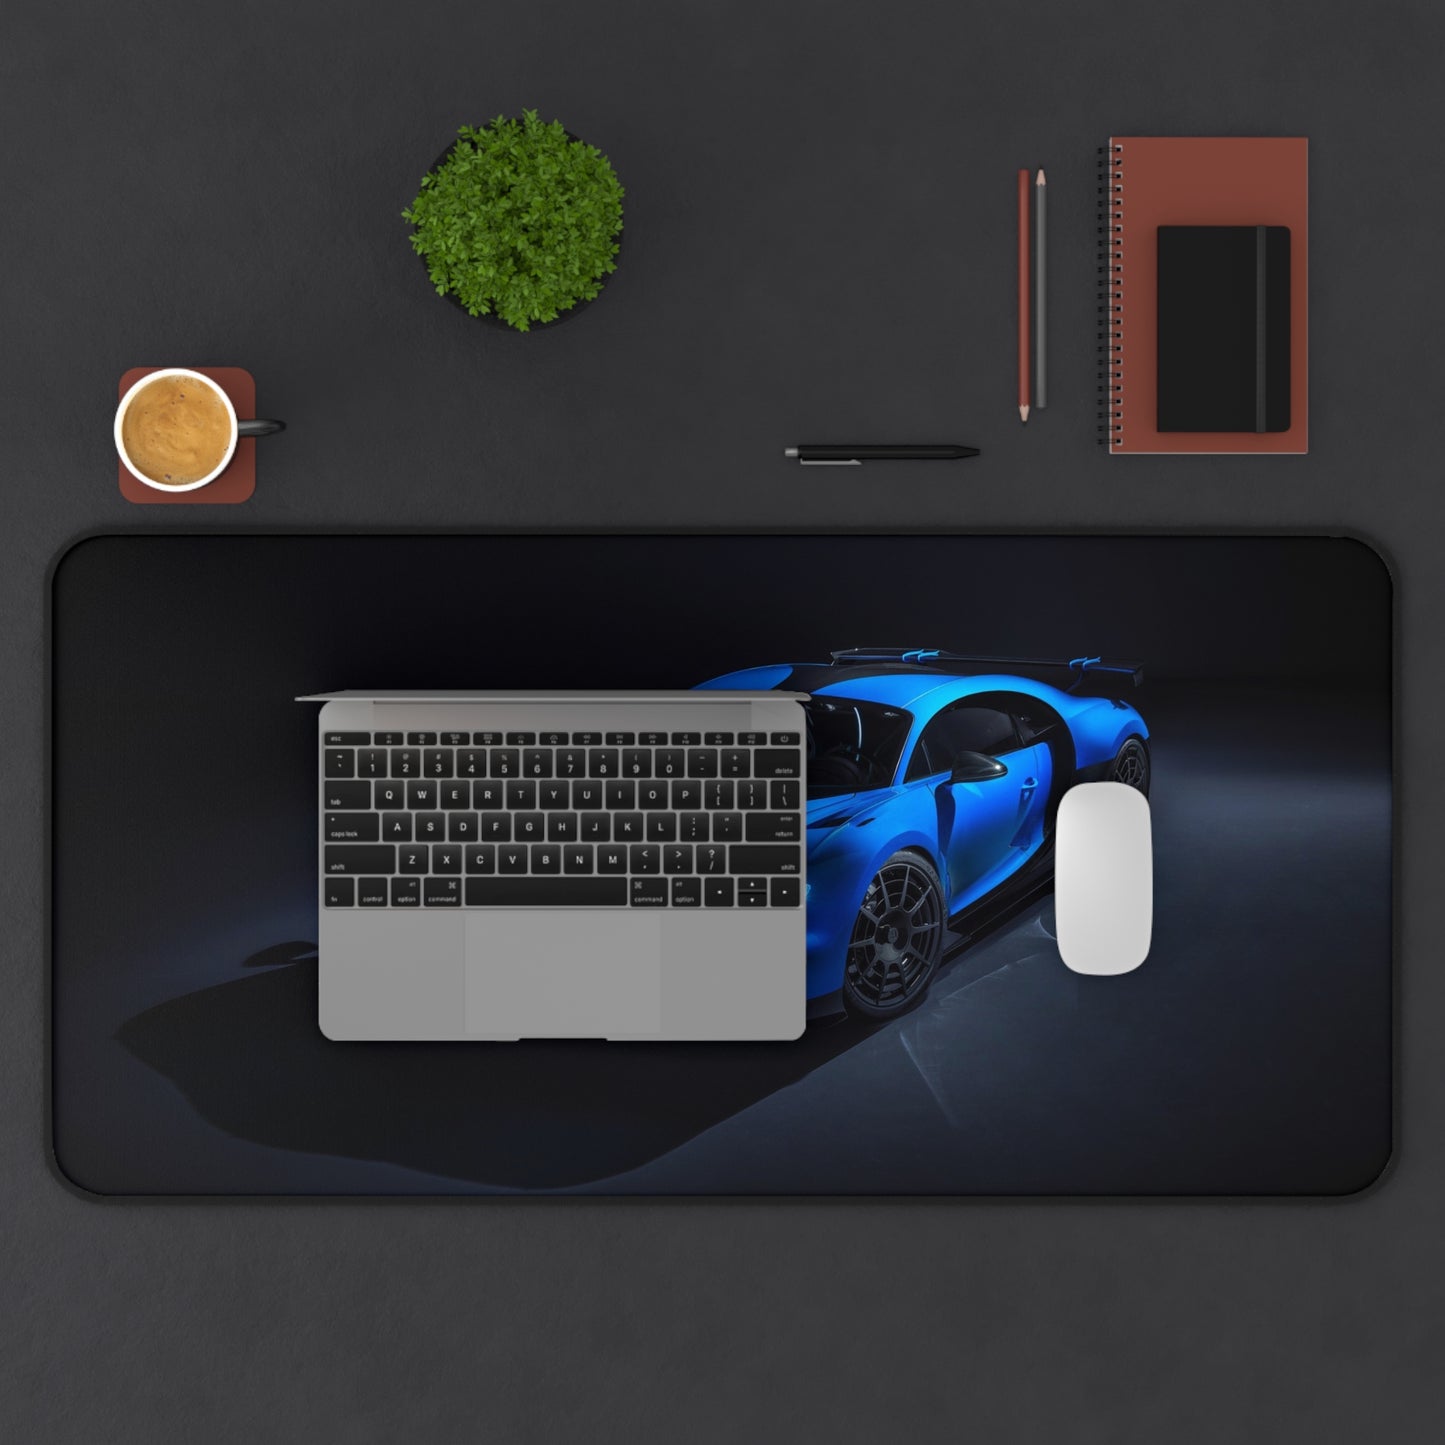 Blue Bugatti High Definition Super Car Office Home Decor Desk Mat Mousepad